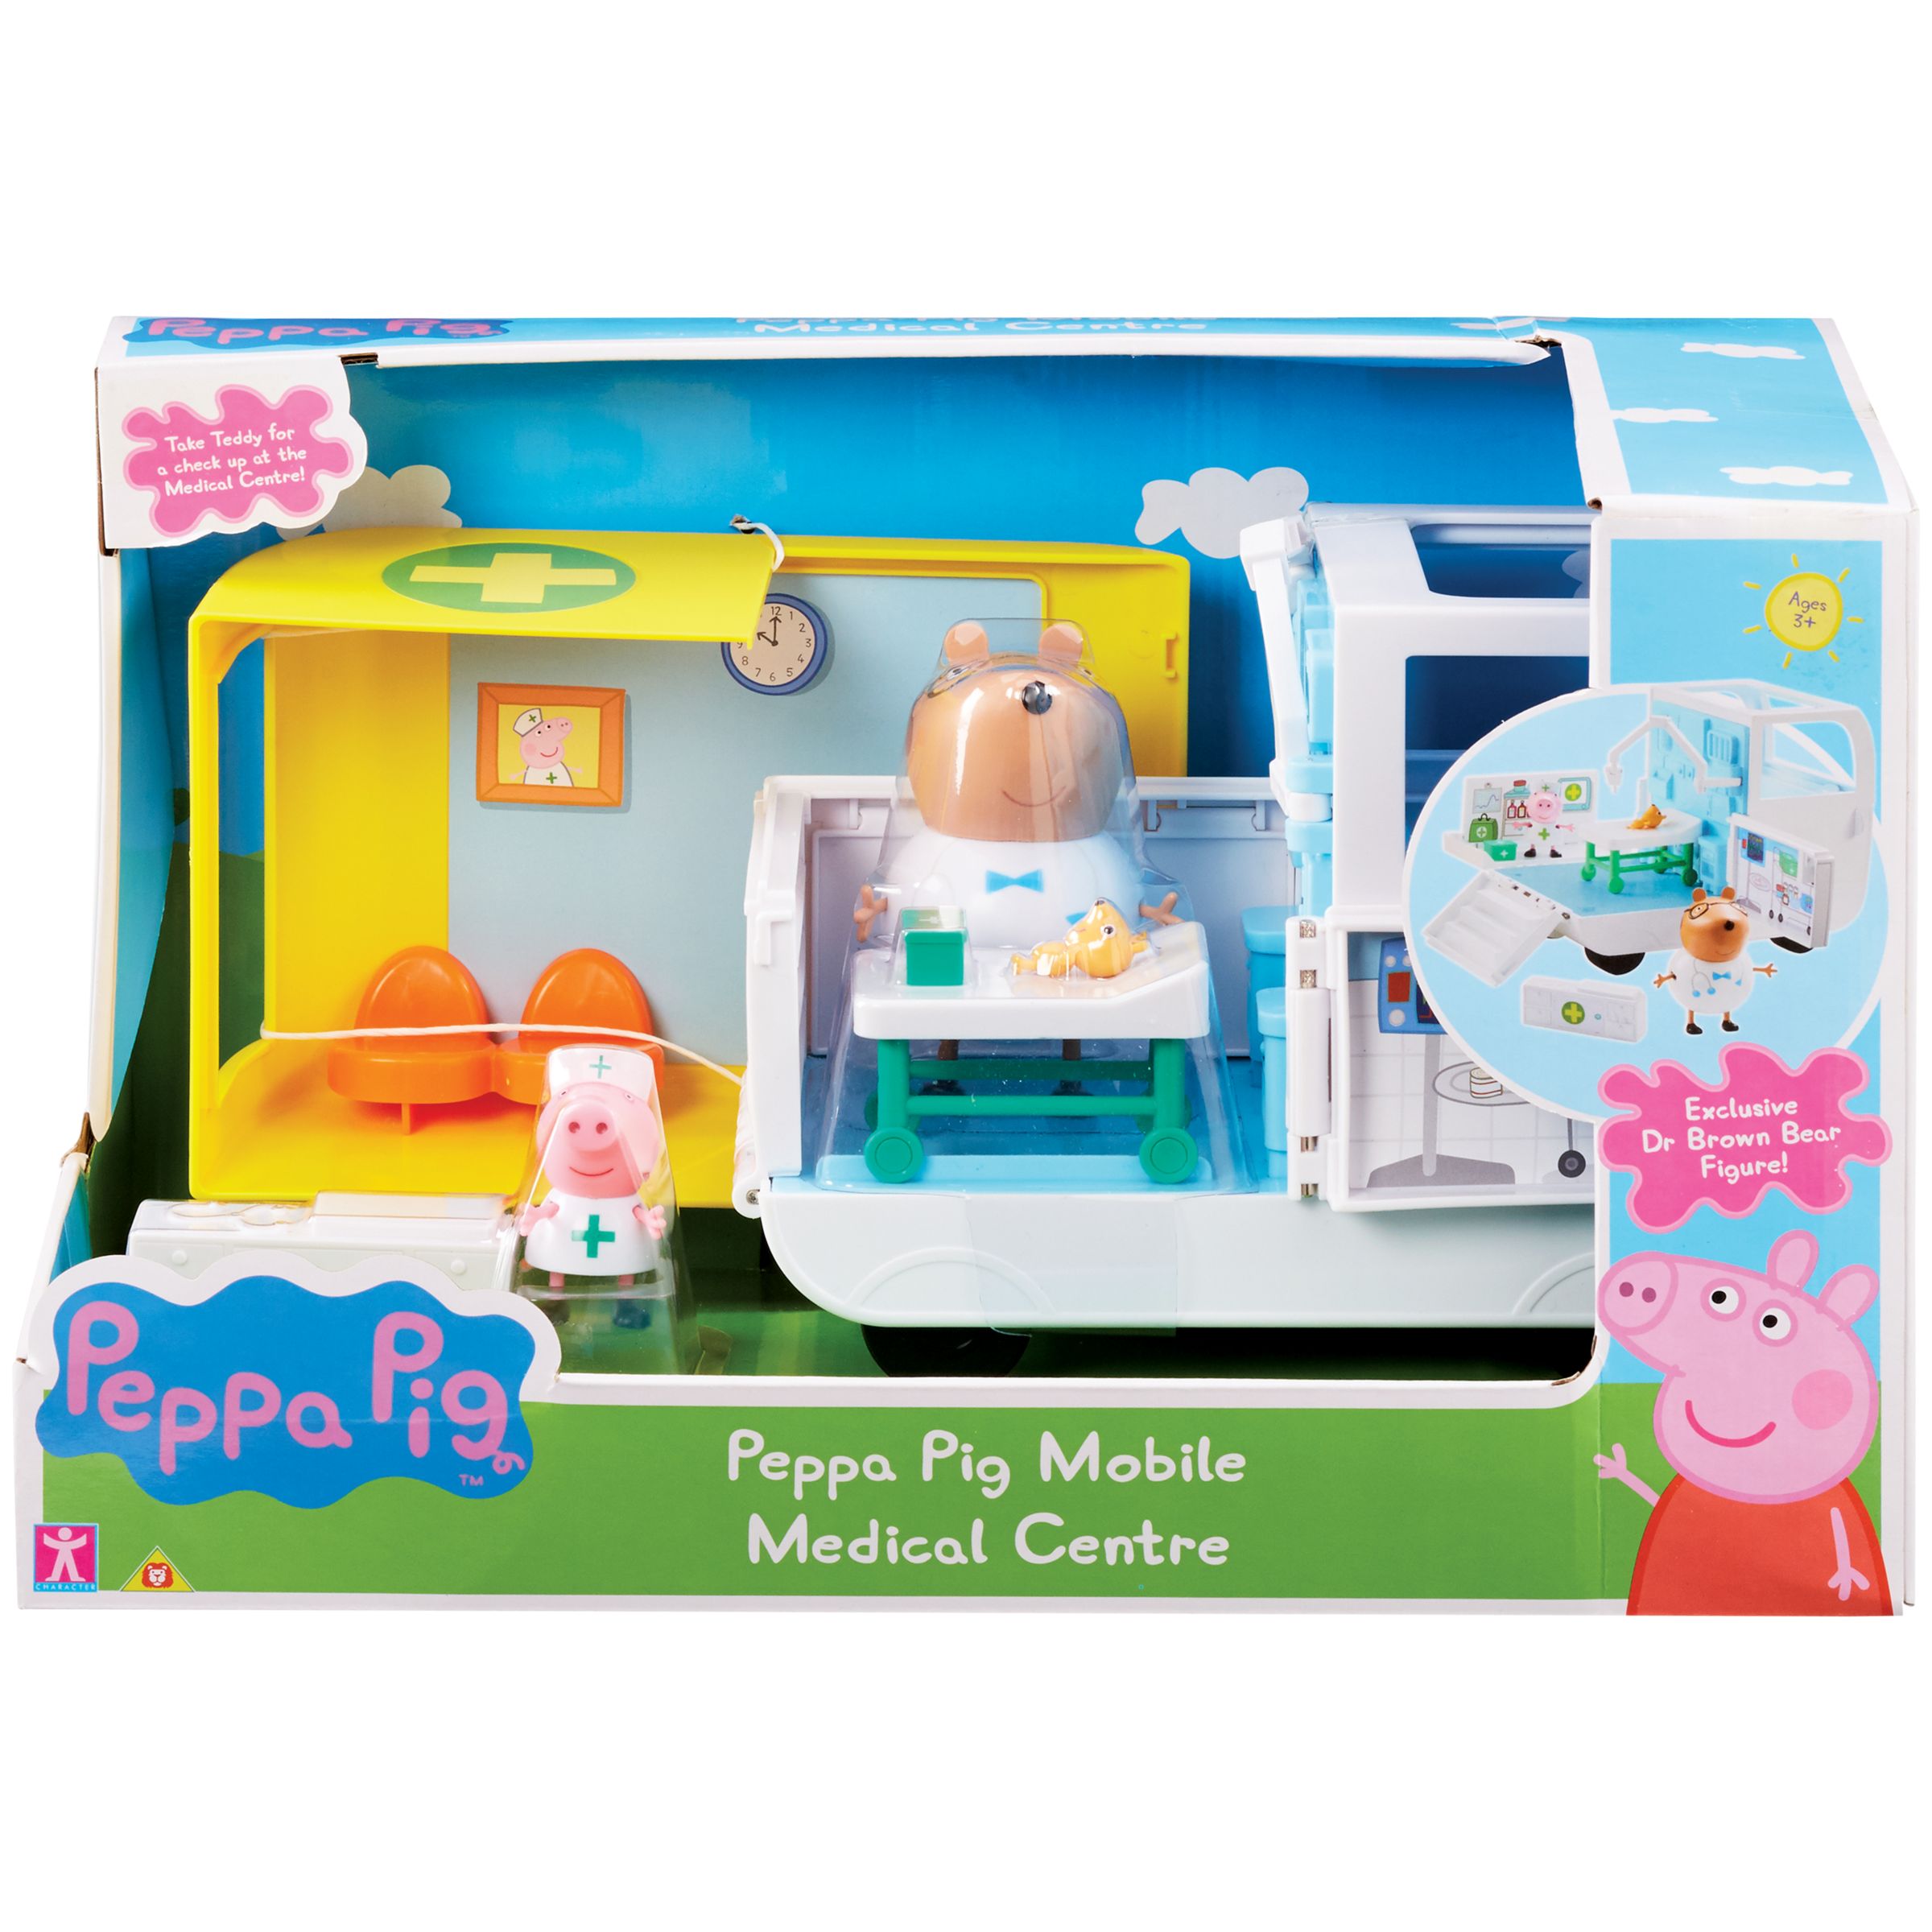 Peppa Pig Mobile Medical Centre Playset